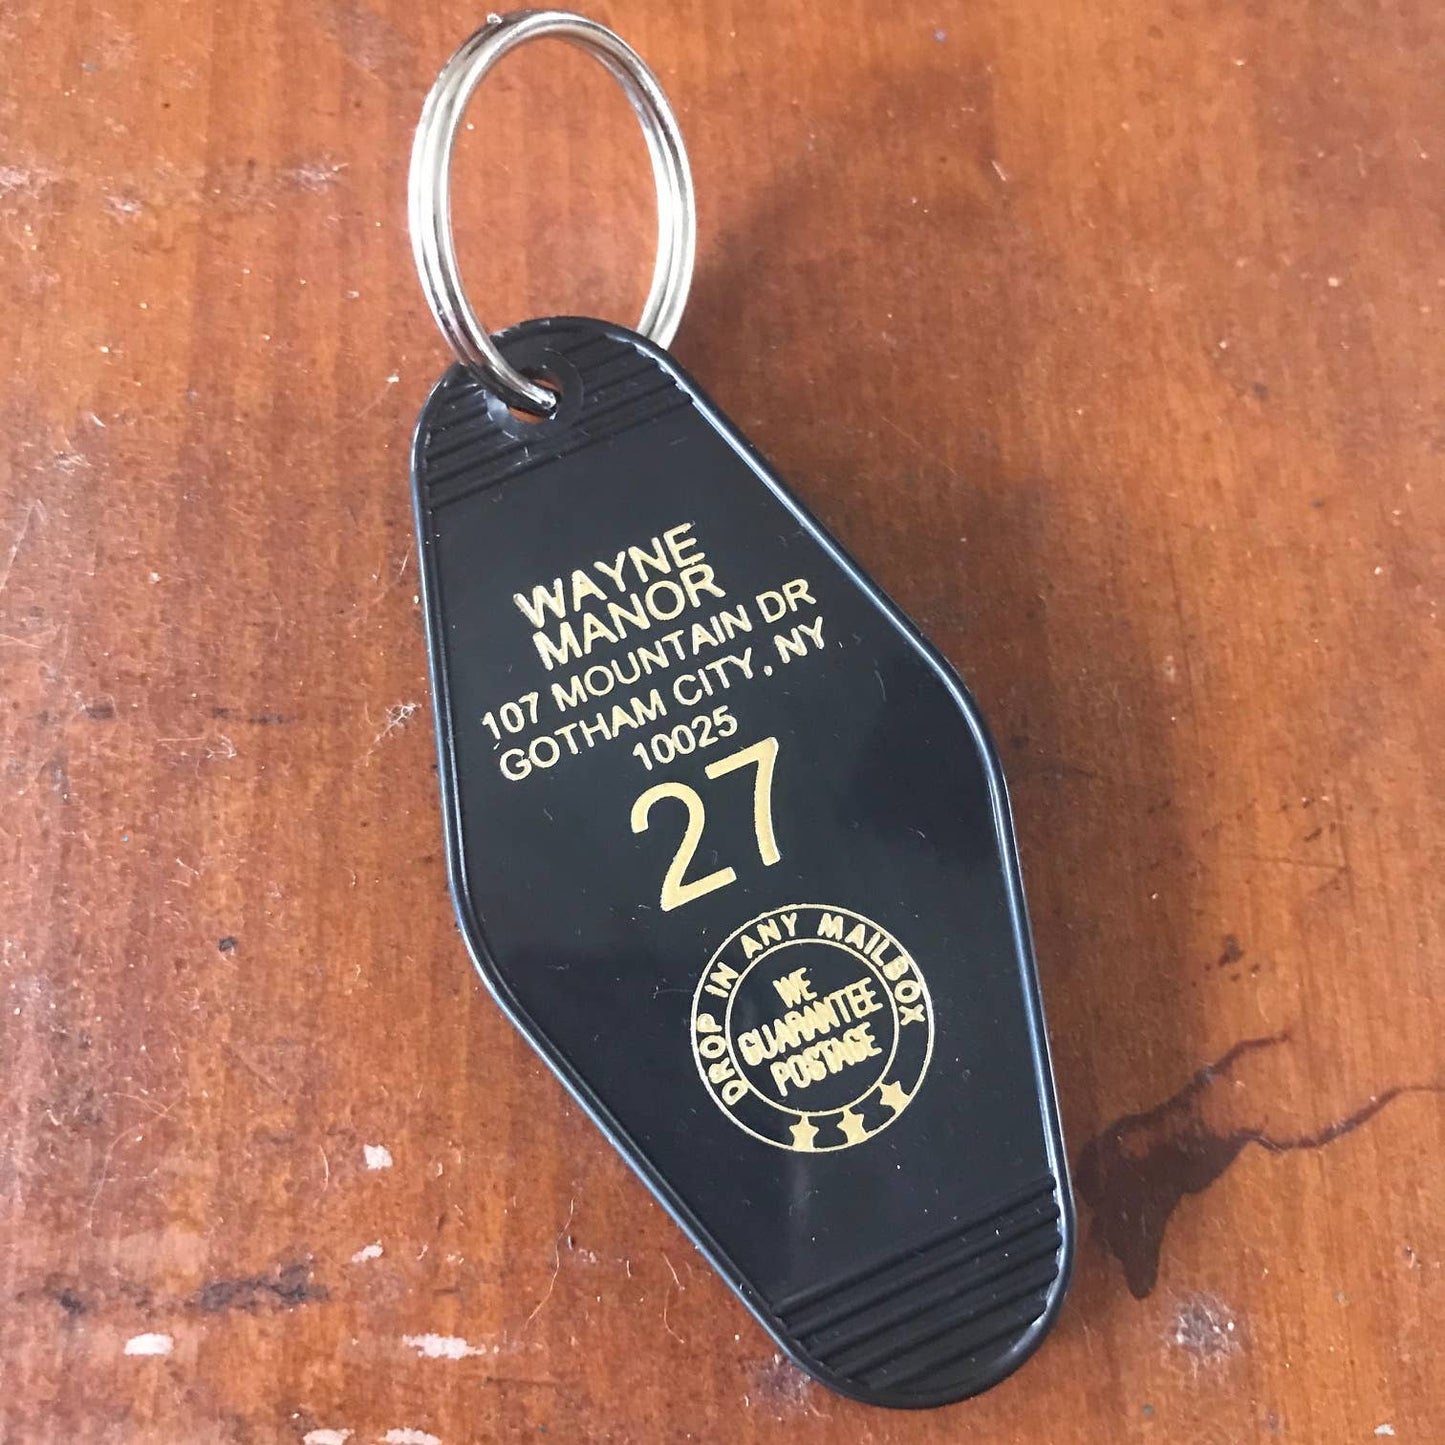 Wayne Manor Motel-Style Key Fob